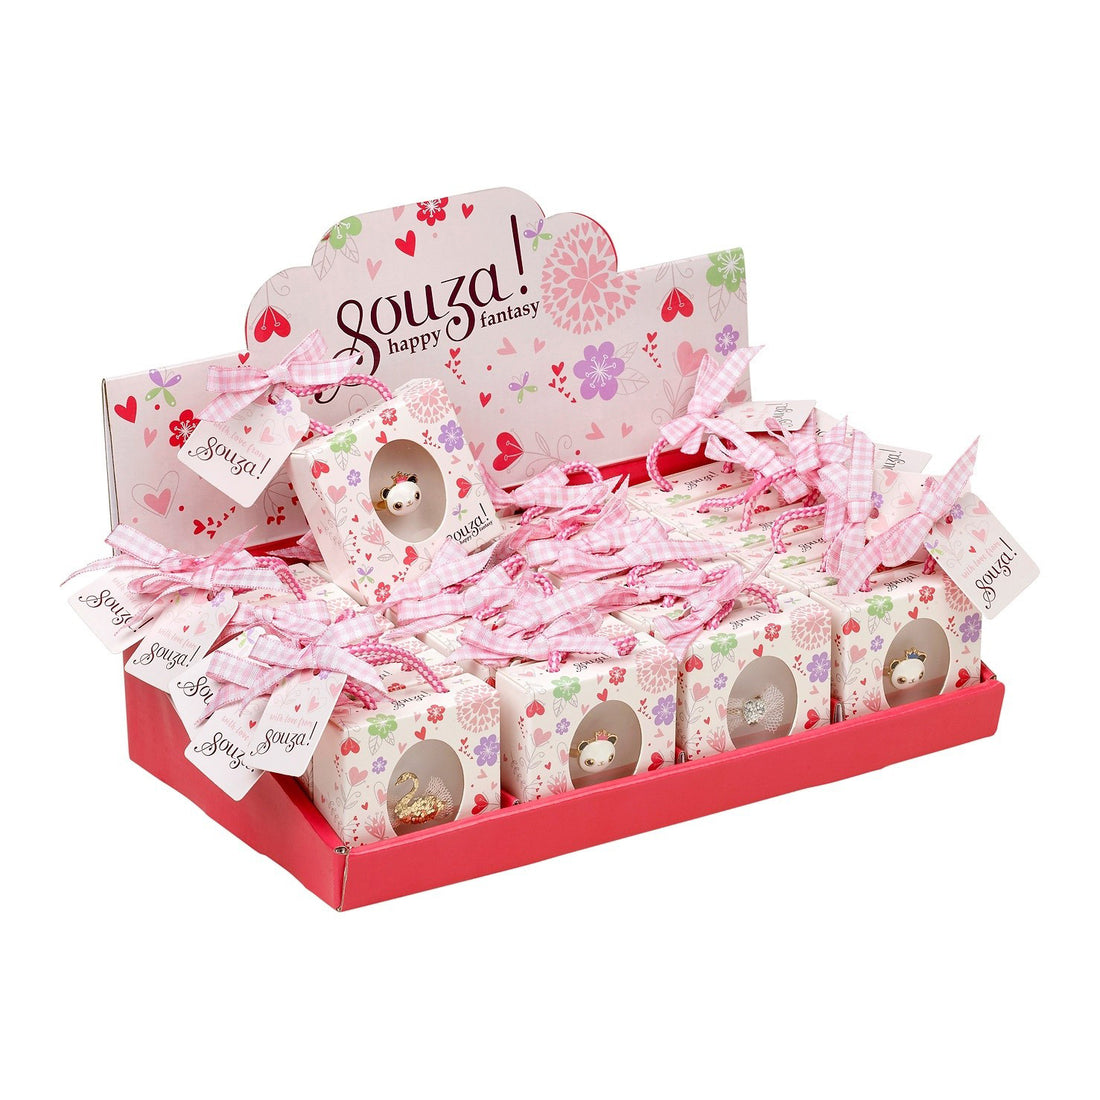 souza-gift-box-rosa-ring- (1)